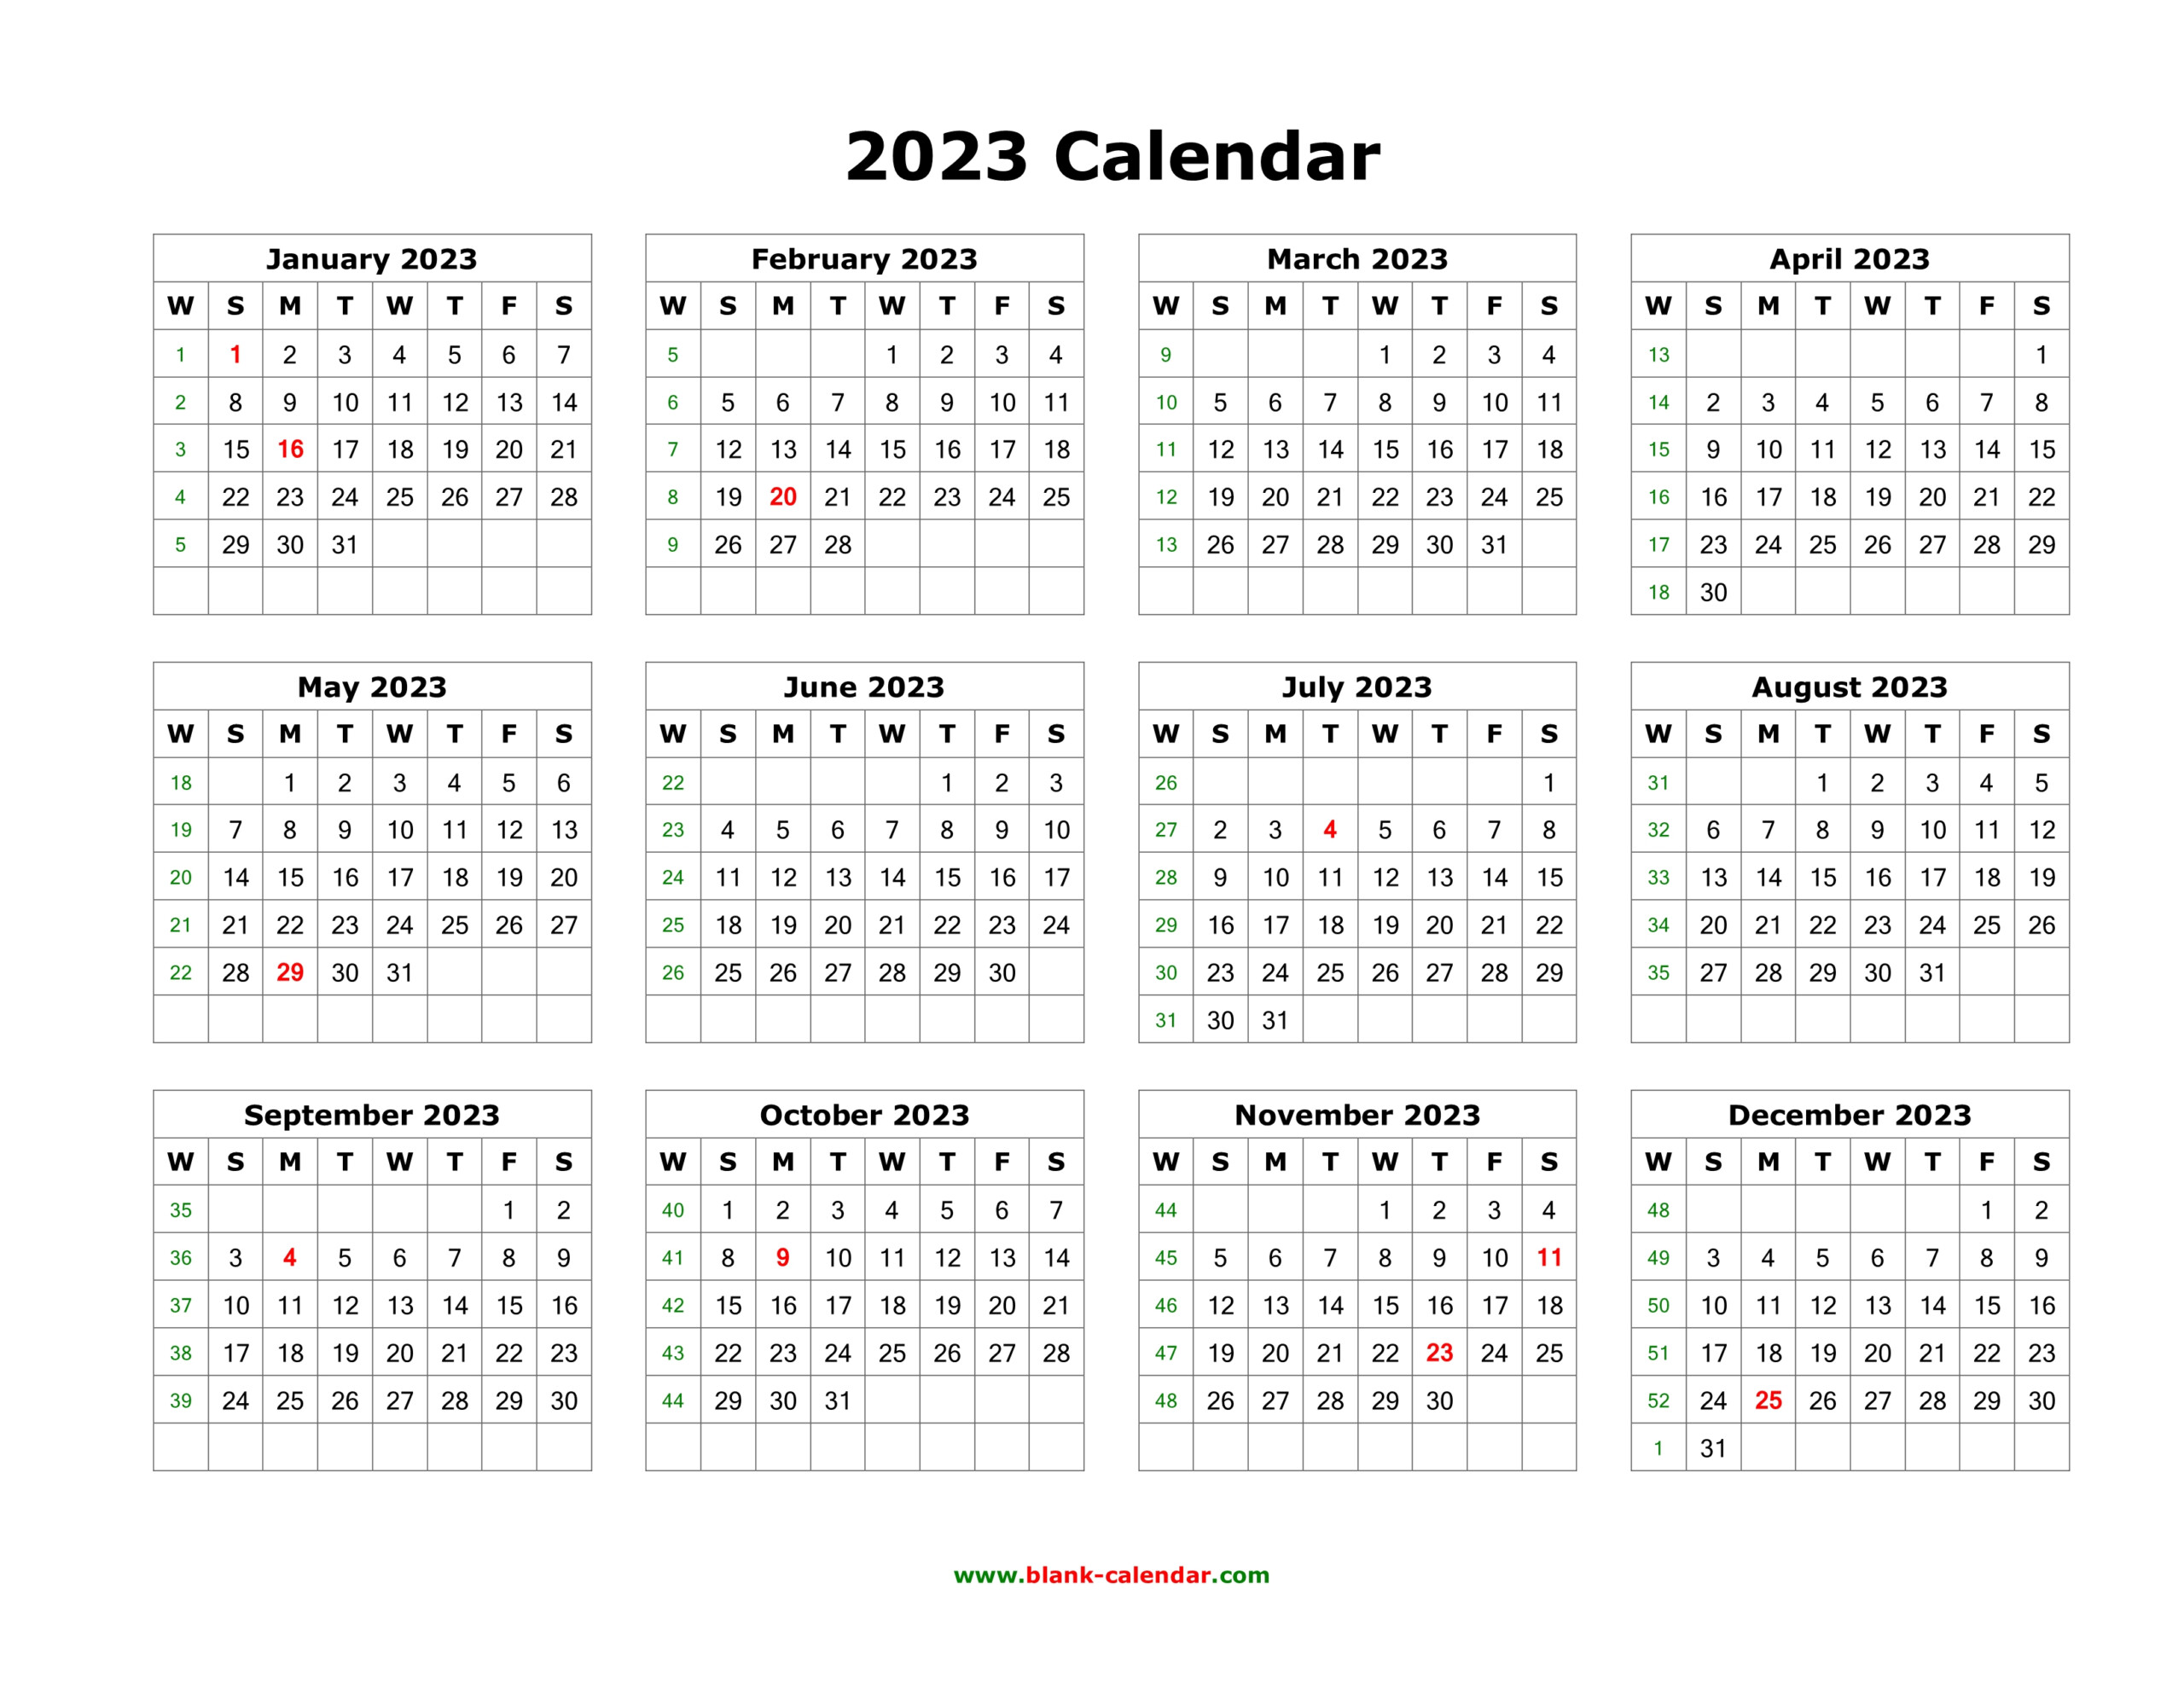 2023-december-printable-calendar-noolyo